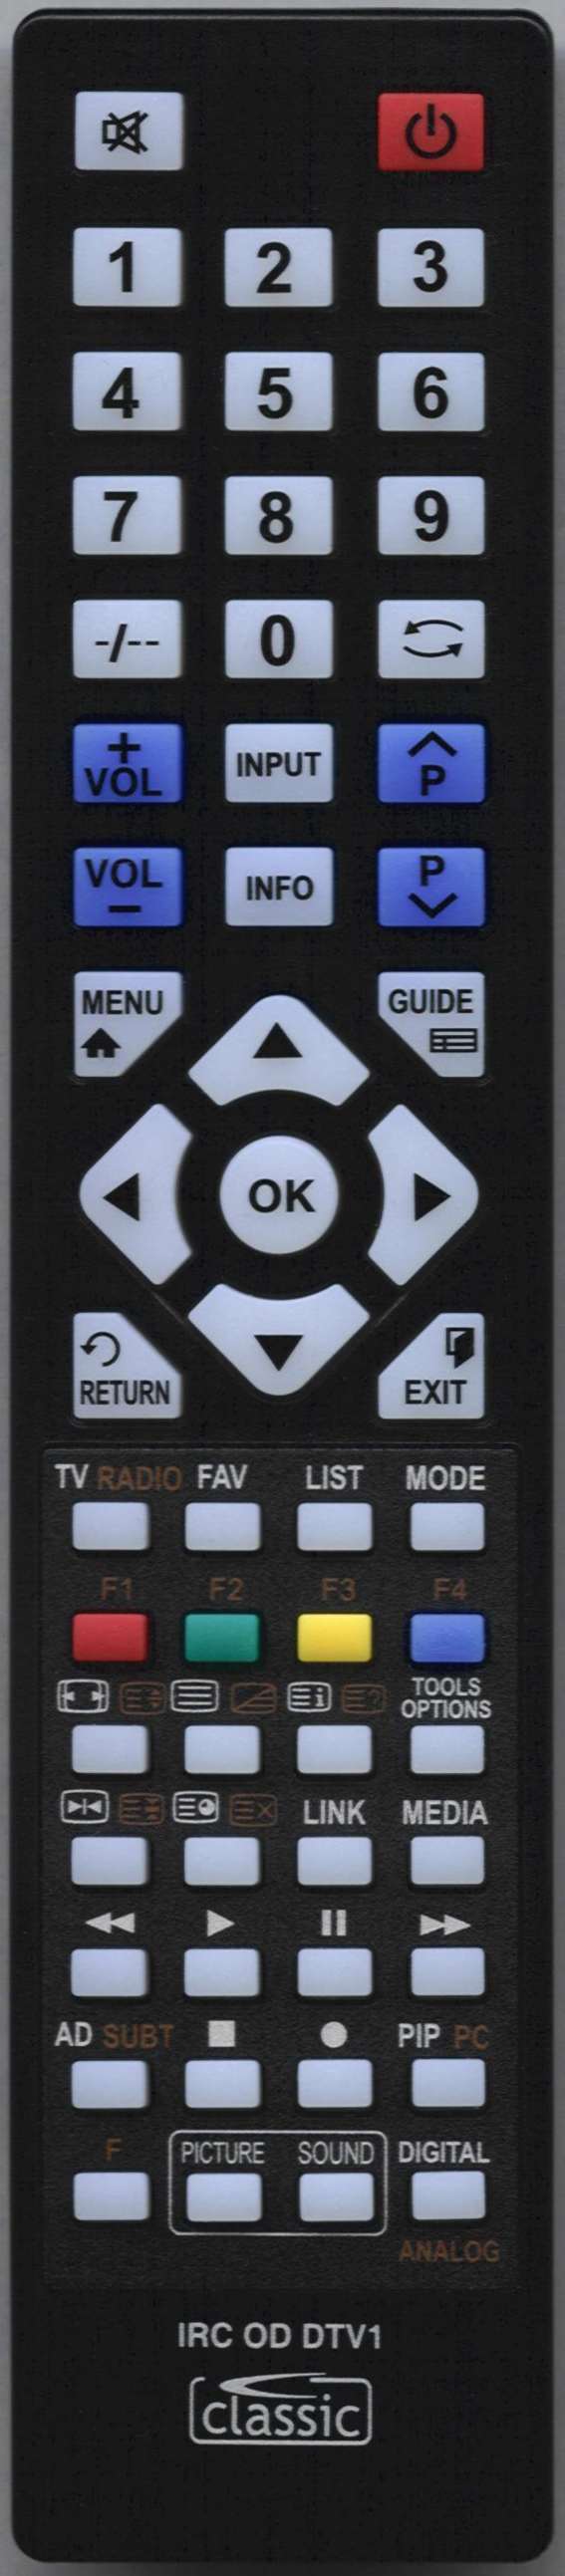 Samsung UE49KU6400SXXN Remote Control